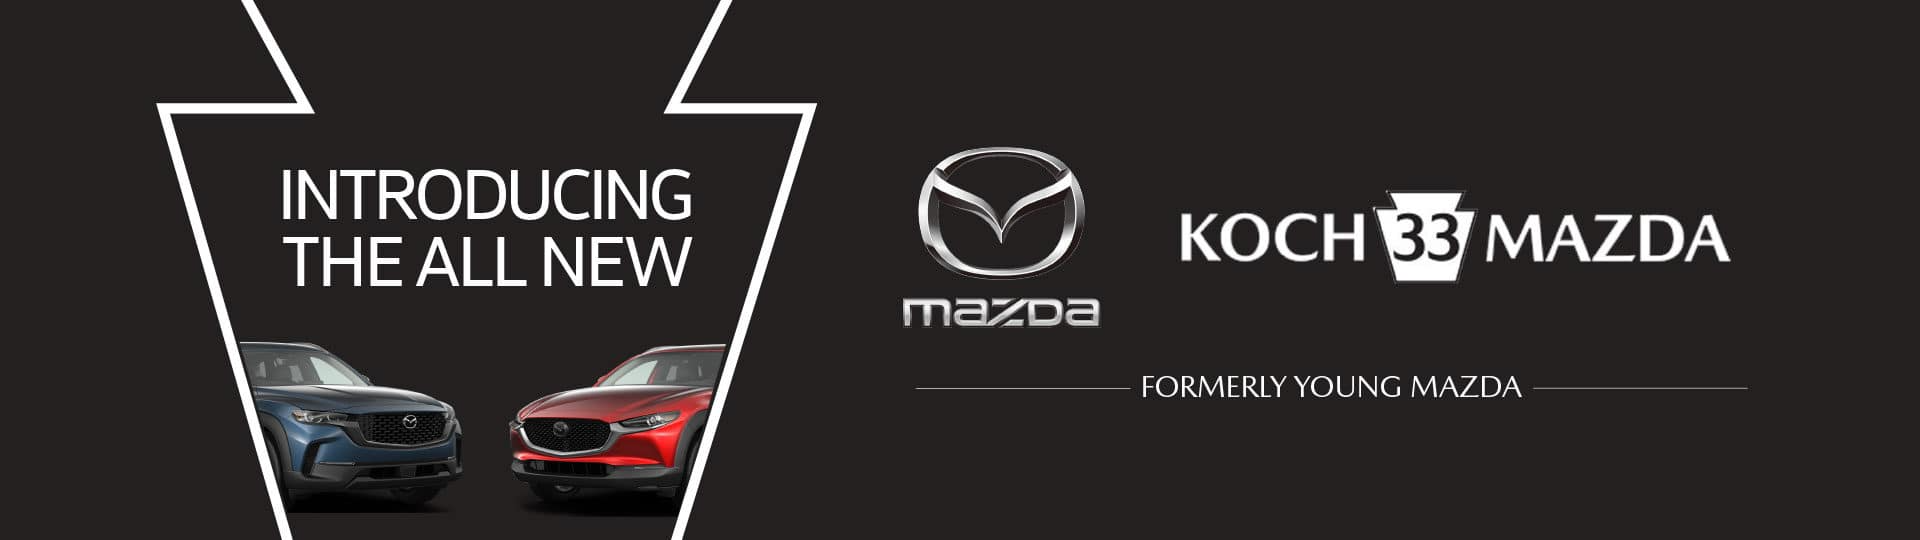 The new Koch 33 Mazda